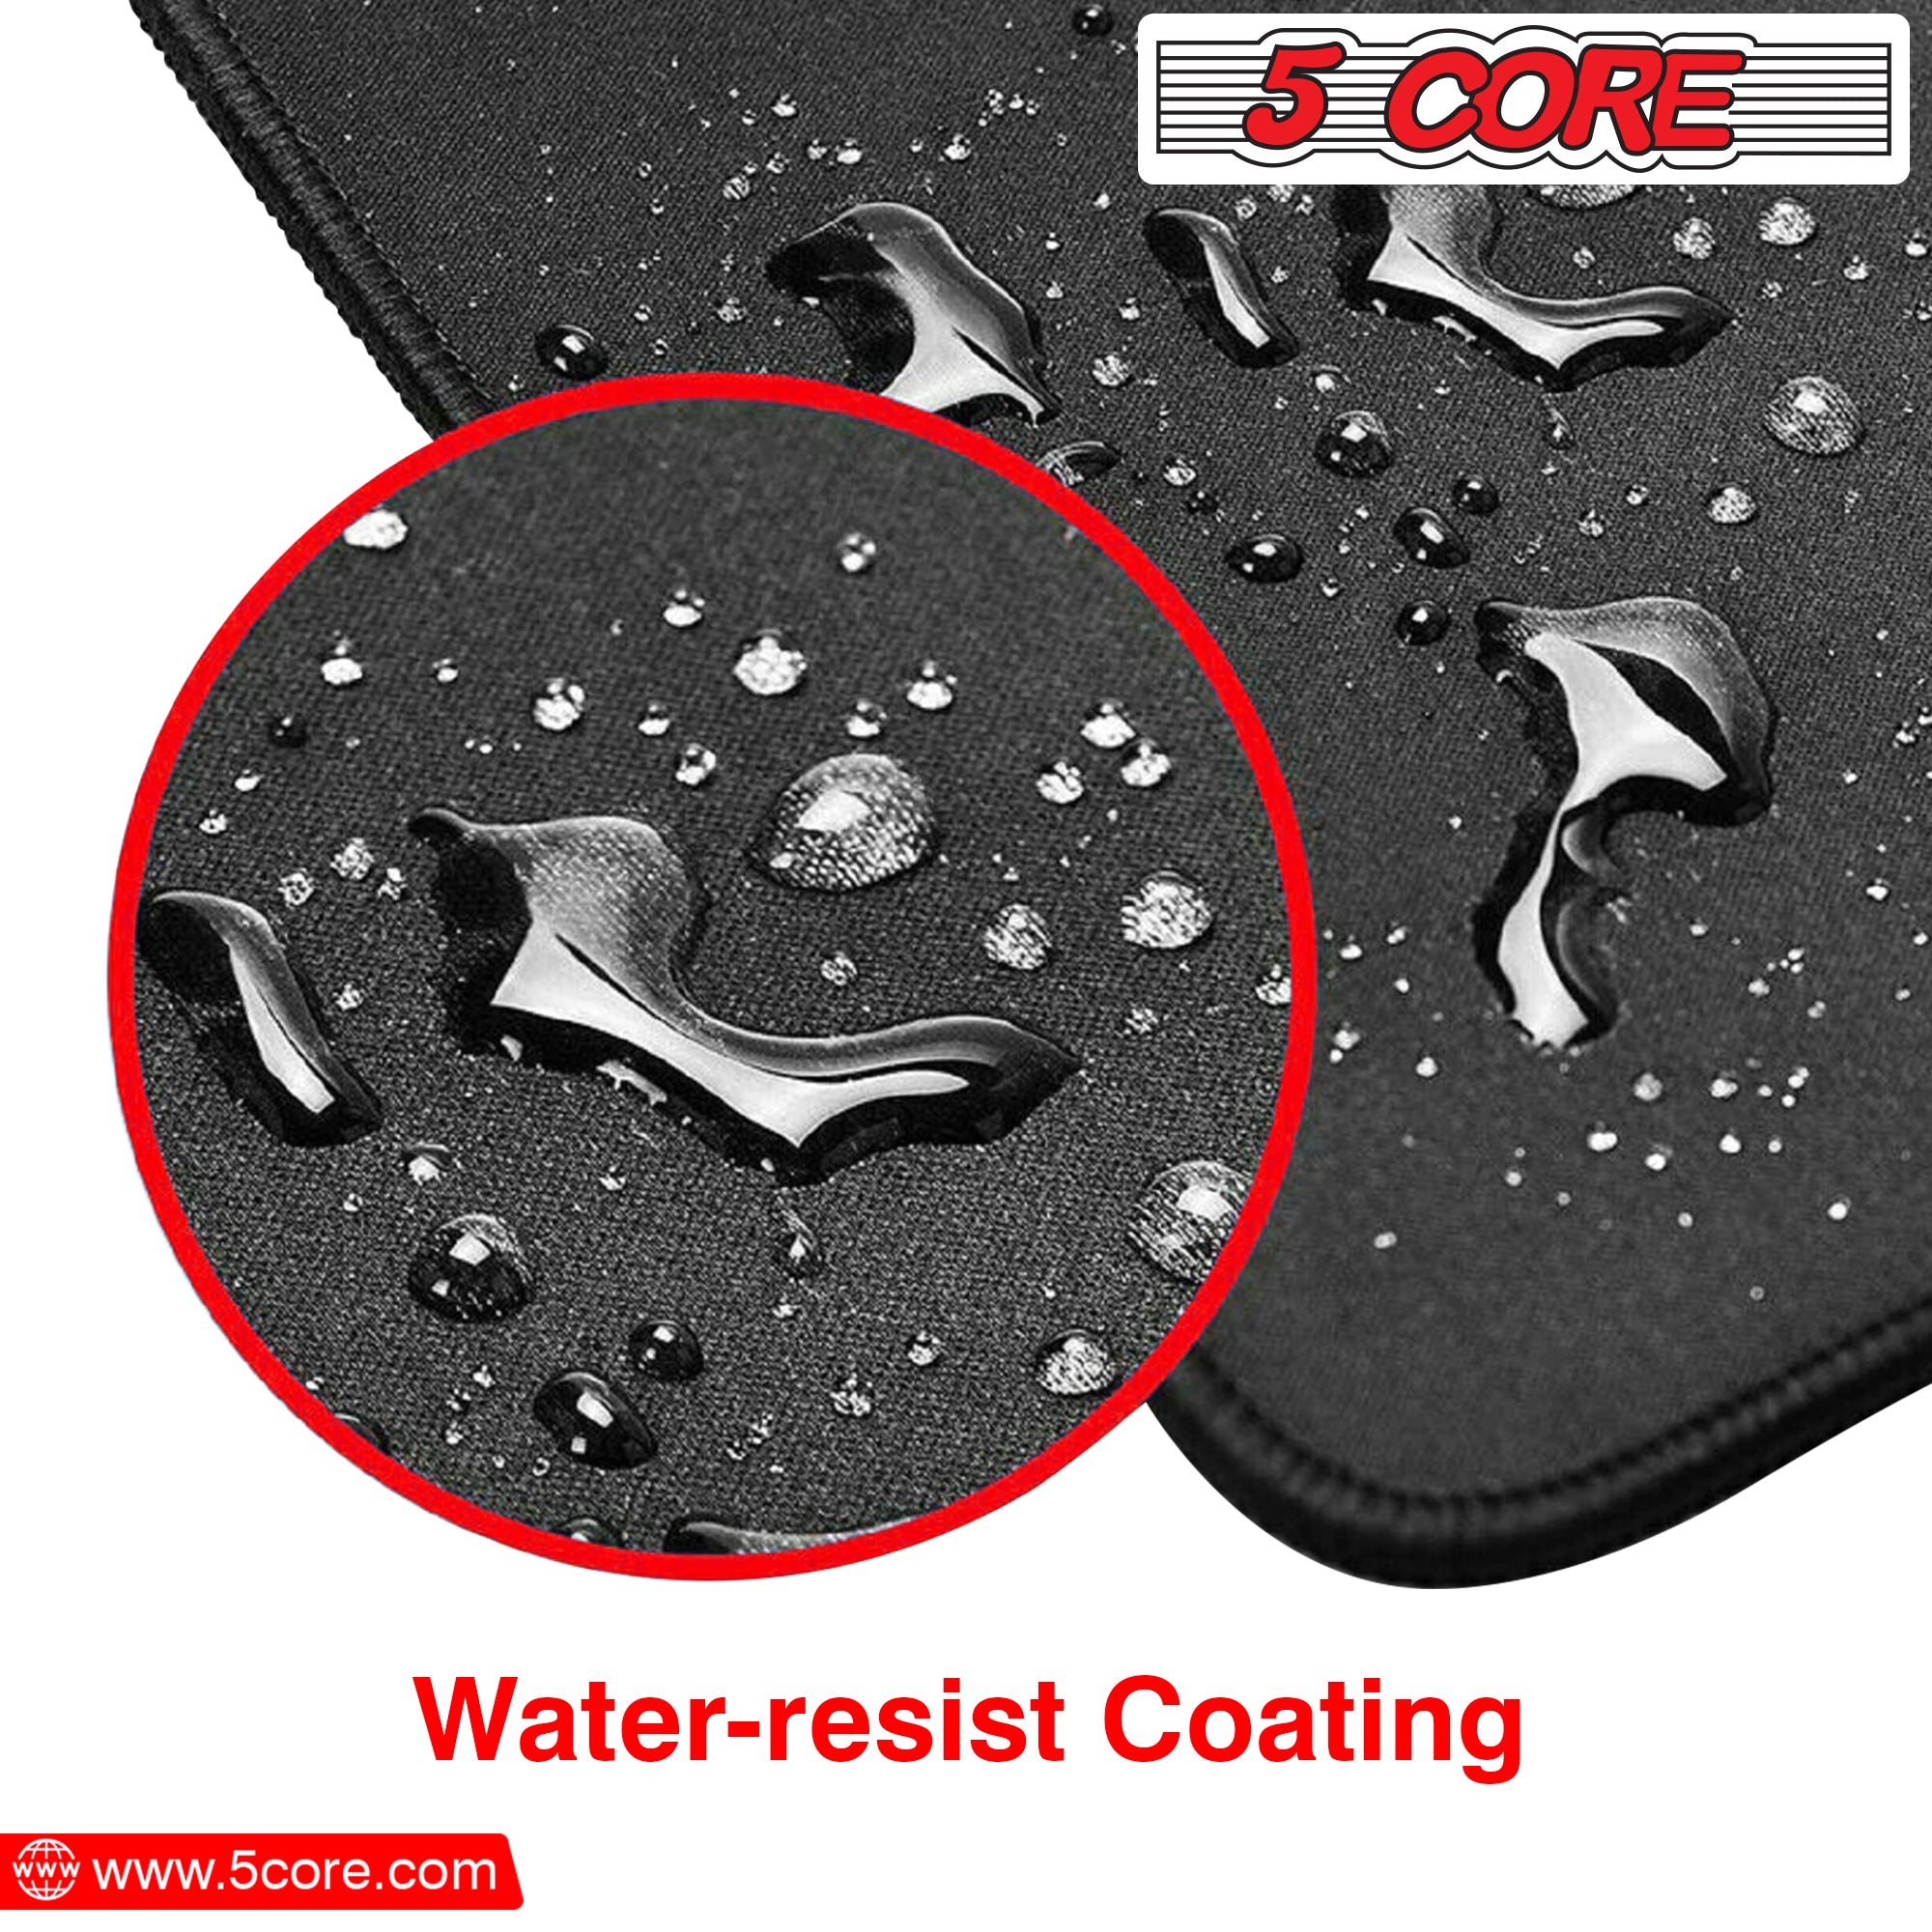 water resist coating gaming mouse pad